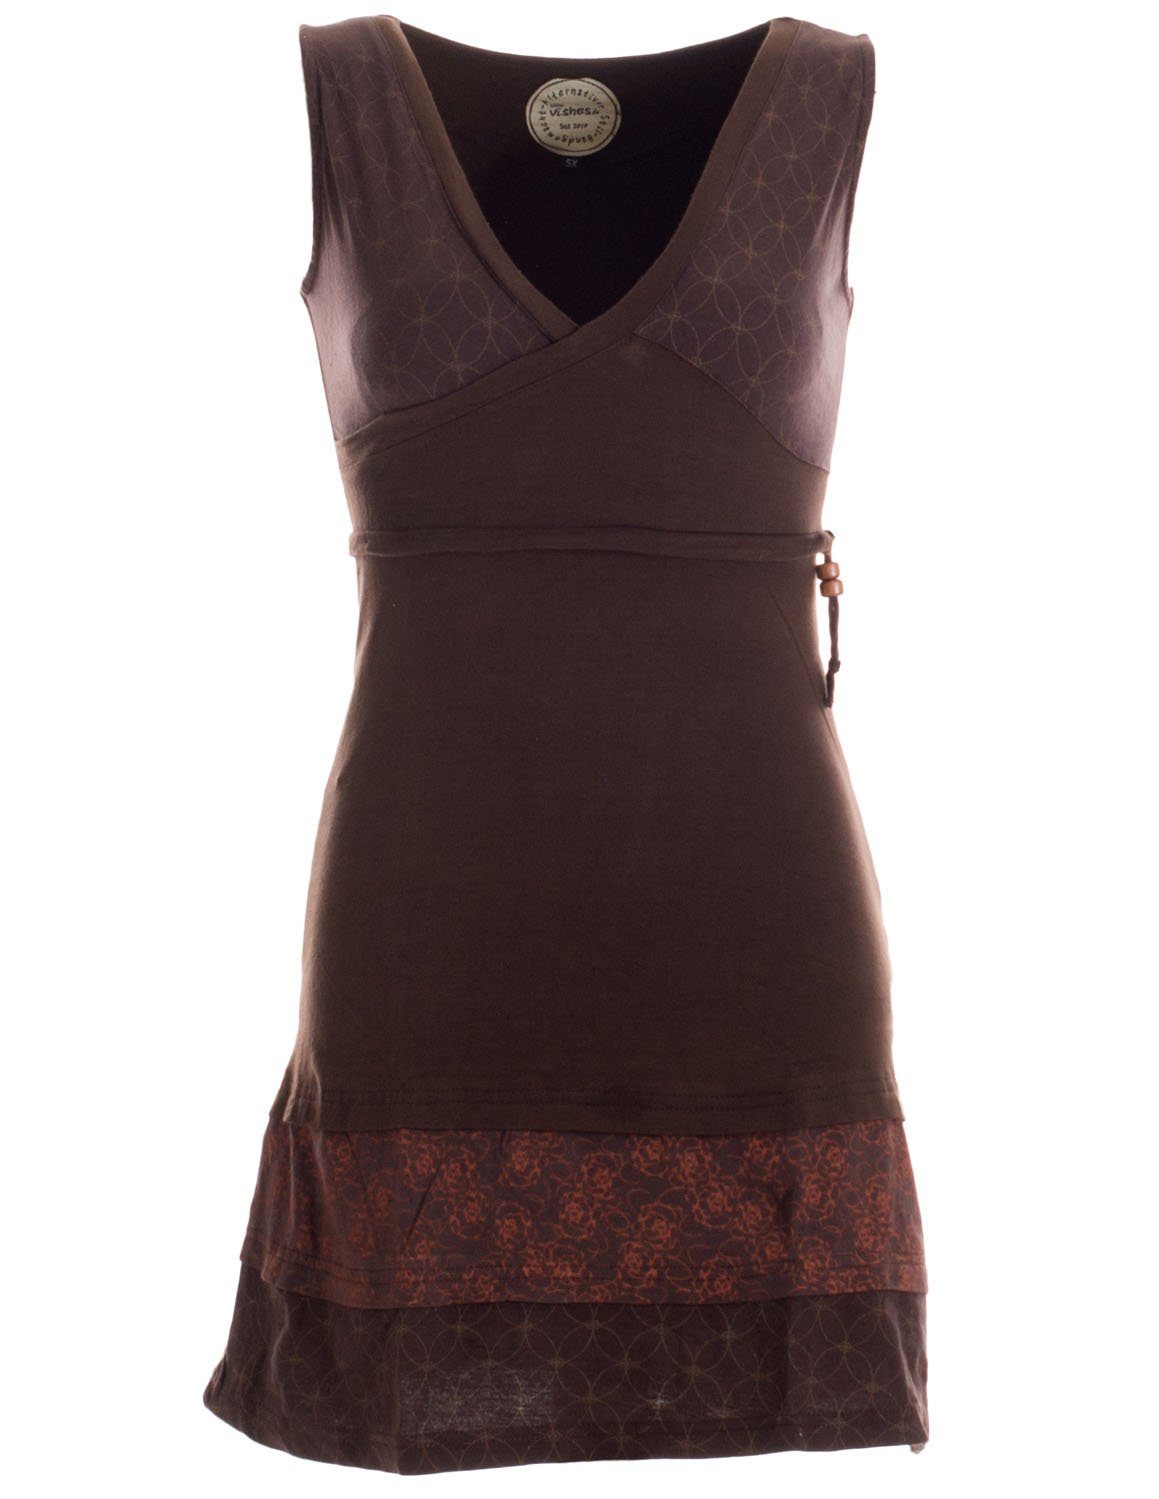 Vishes Sommerkleid Kurzes ärmelloses mini Sommerkleid bedruckt Tunika Elfen, Hippie, Goa, Ethno Style braun | Sommerkleider